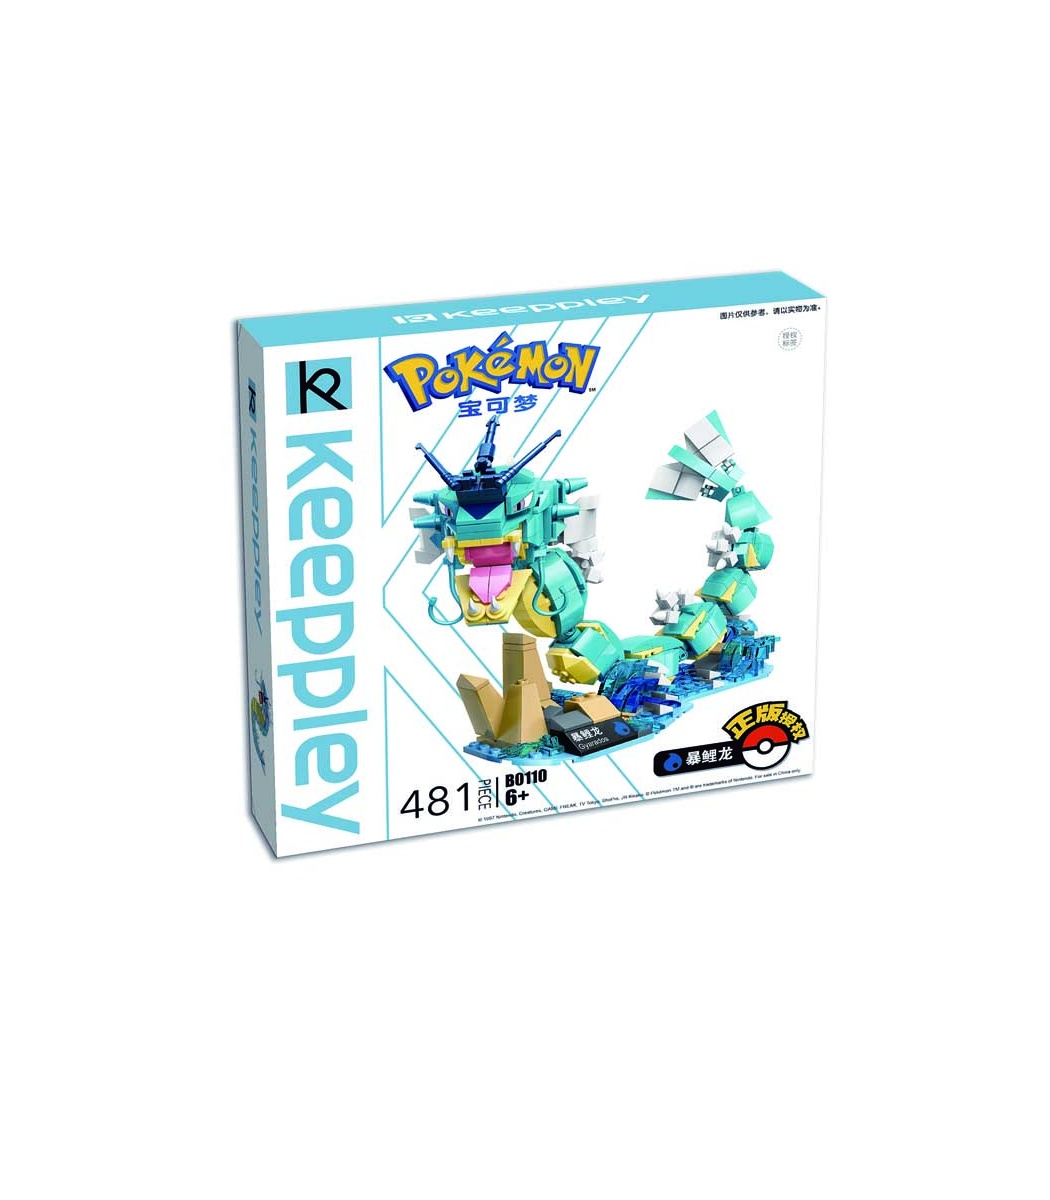 Mega Construx Pokémon Gyarados by Mattel